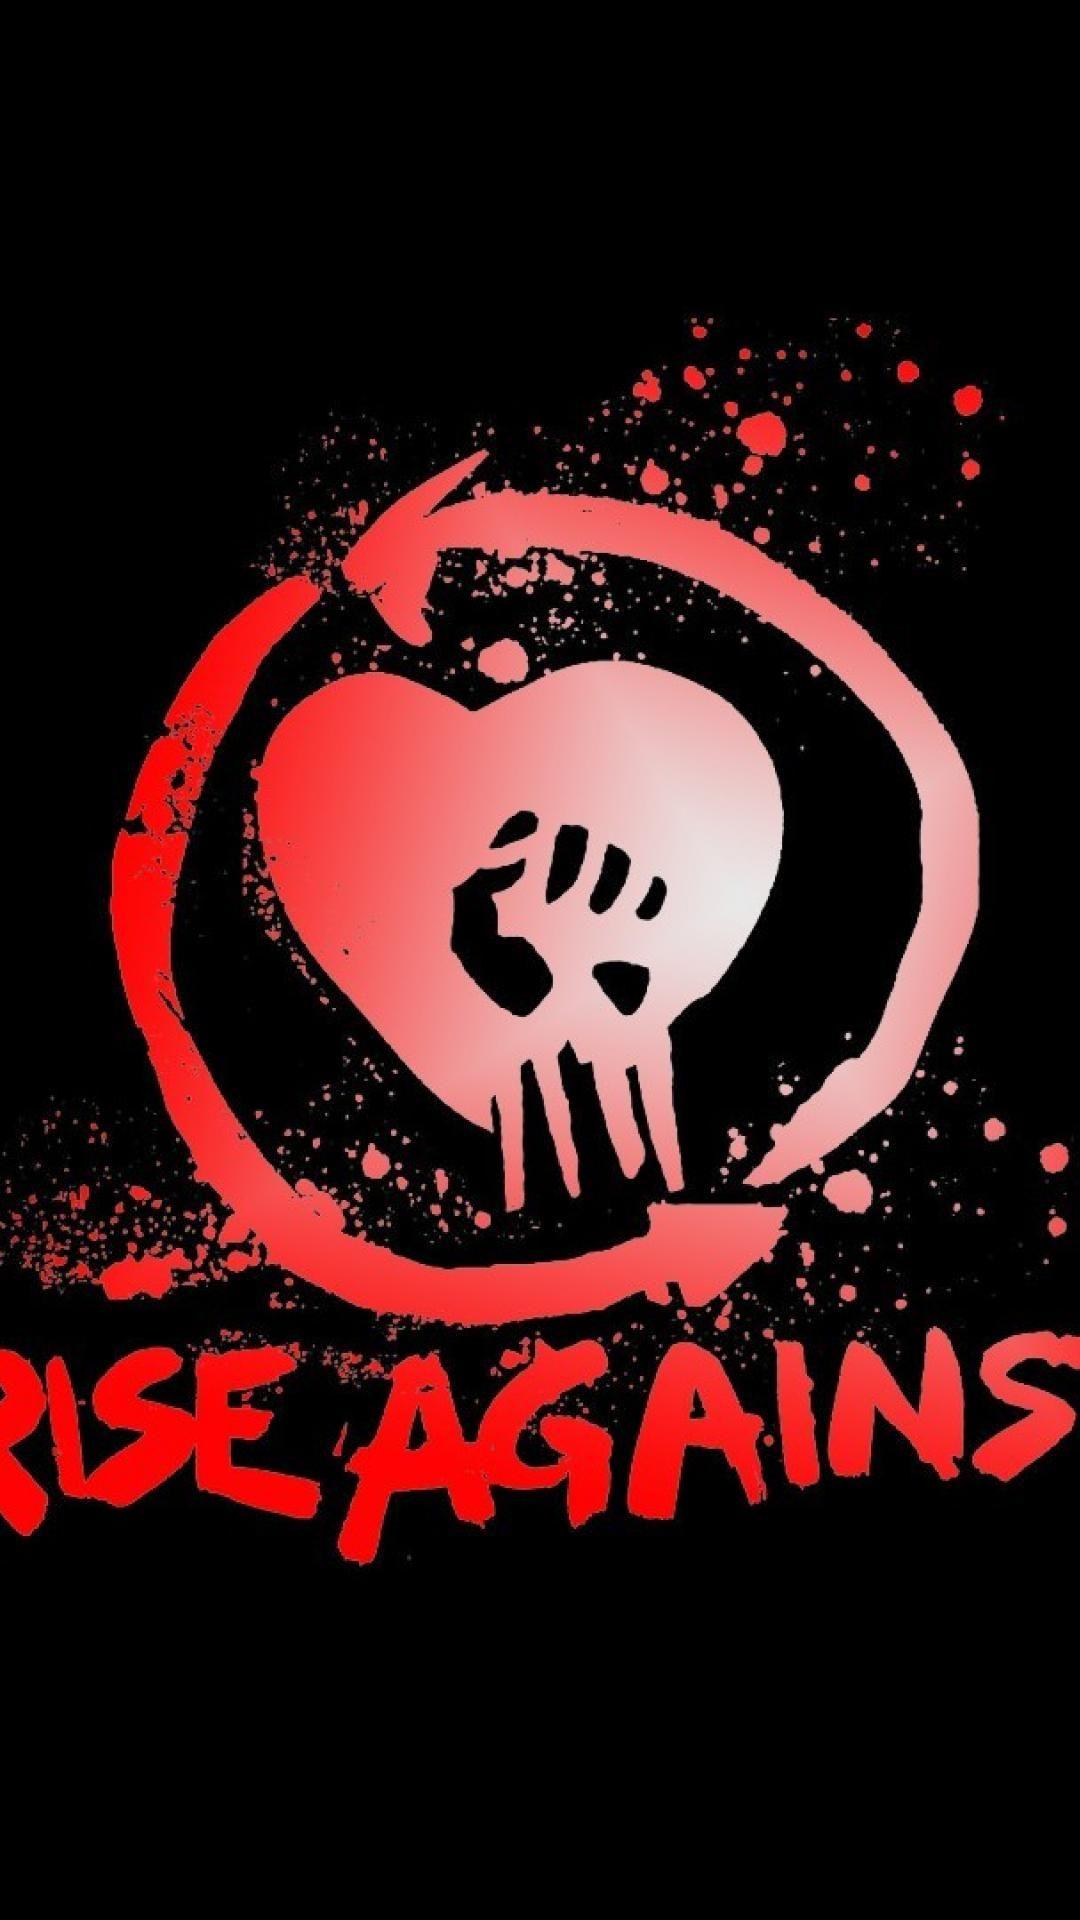 Rise against logos music wallpaper